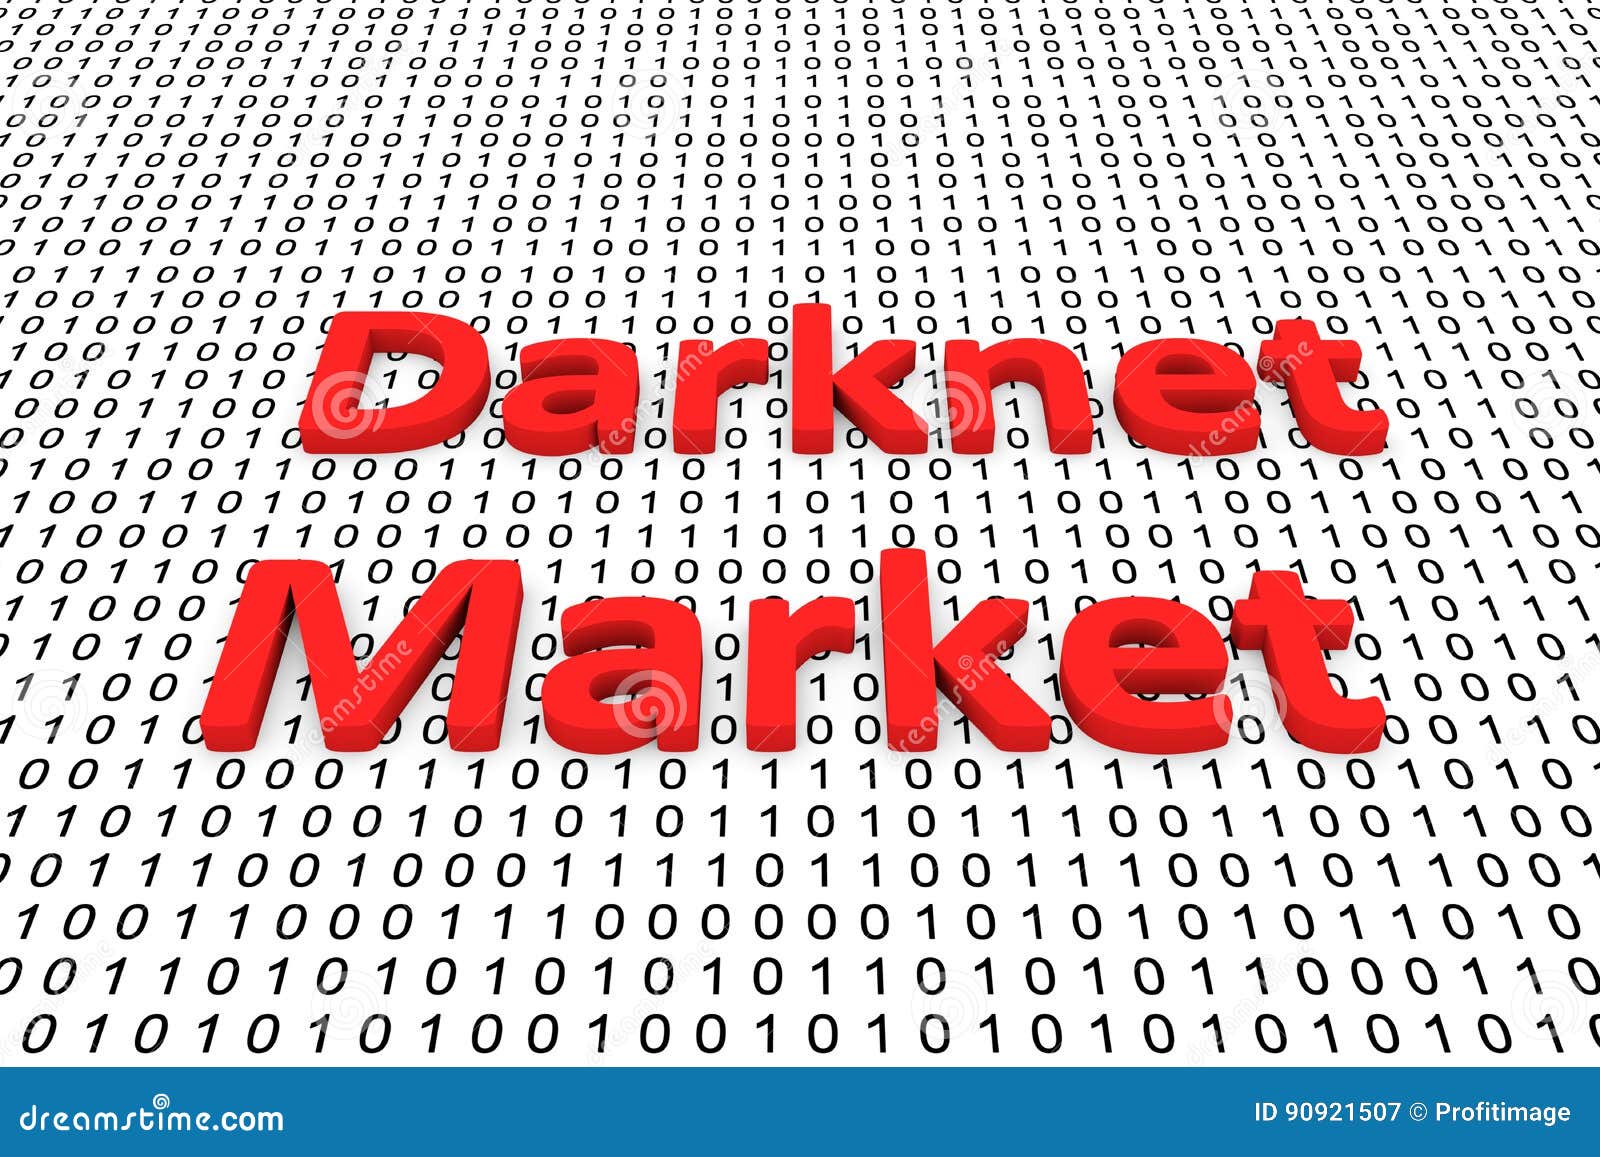 Darknet Market Onions